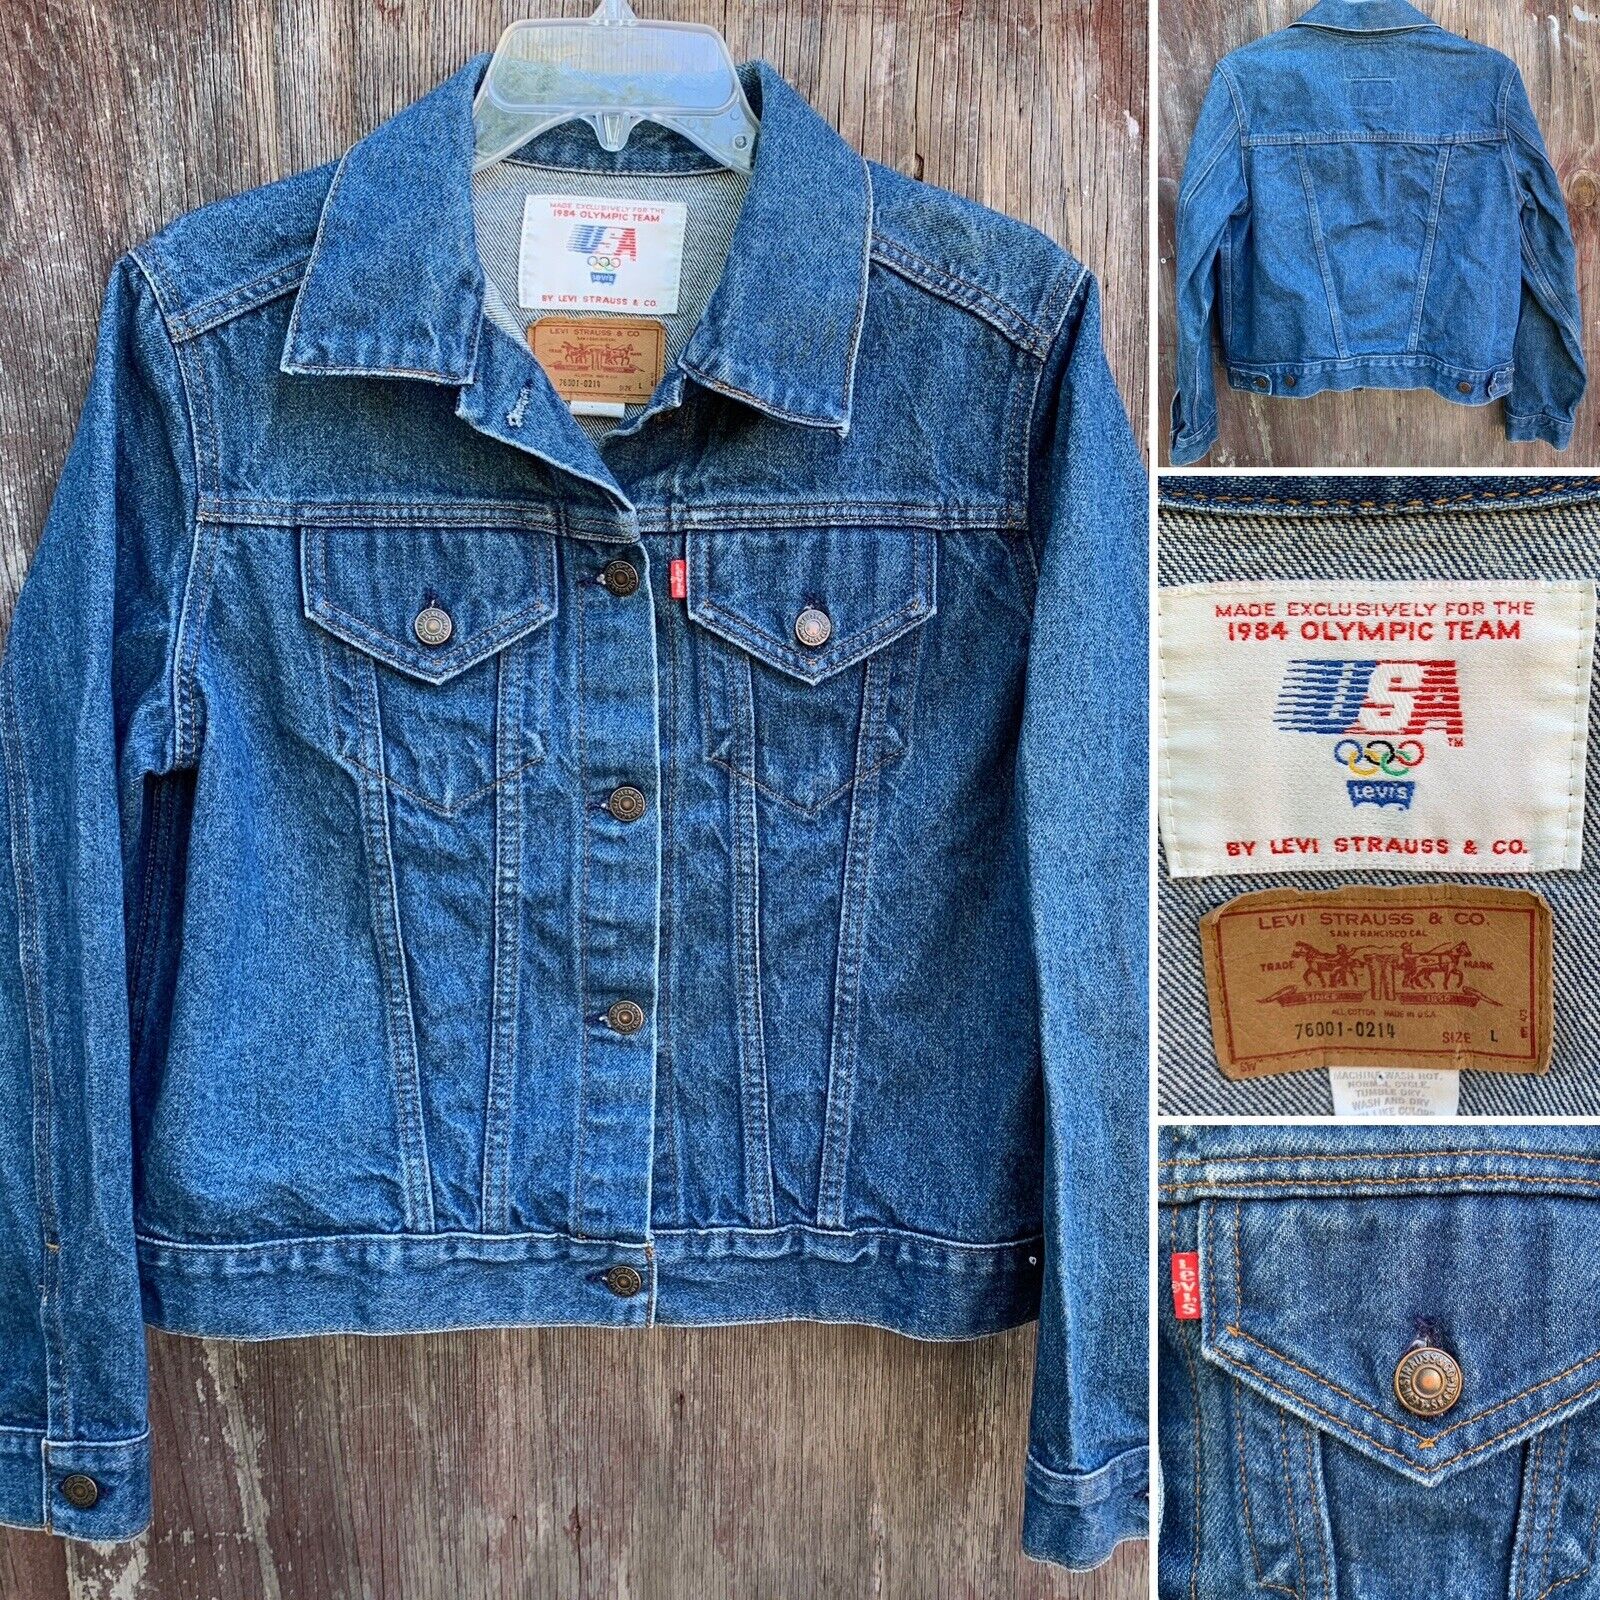 1984 Olympic Team Vintage Levis Denim Jacket 76001-0214 Size L 80s 1980s